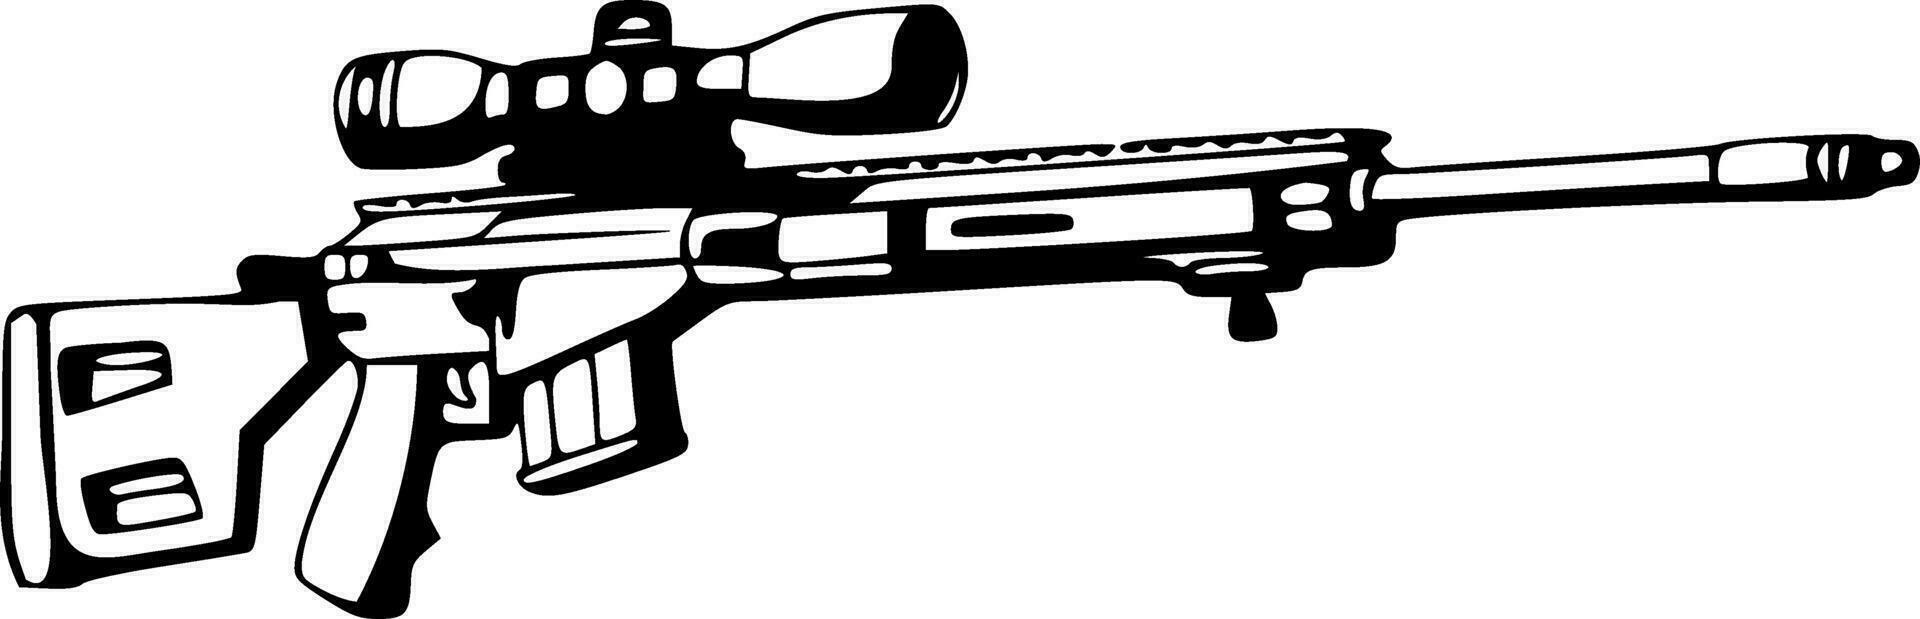 Sniper rifle gun black outlines vector illustration